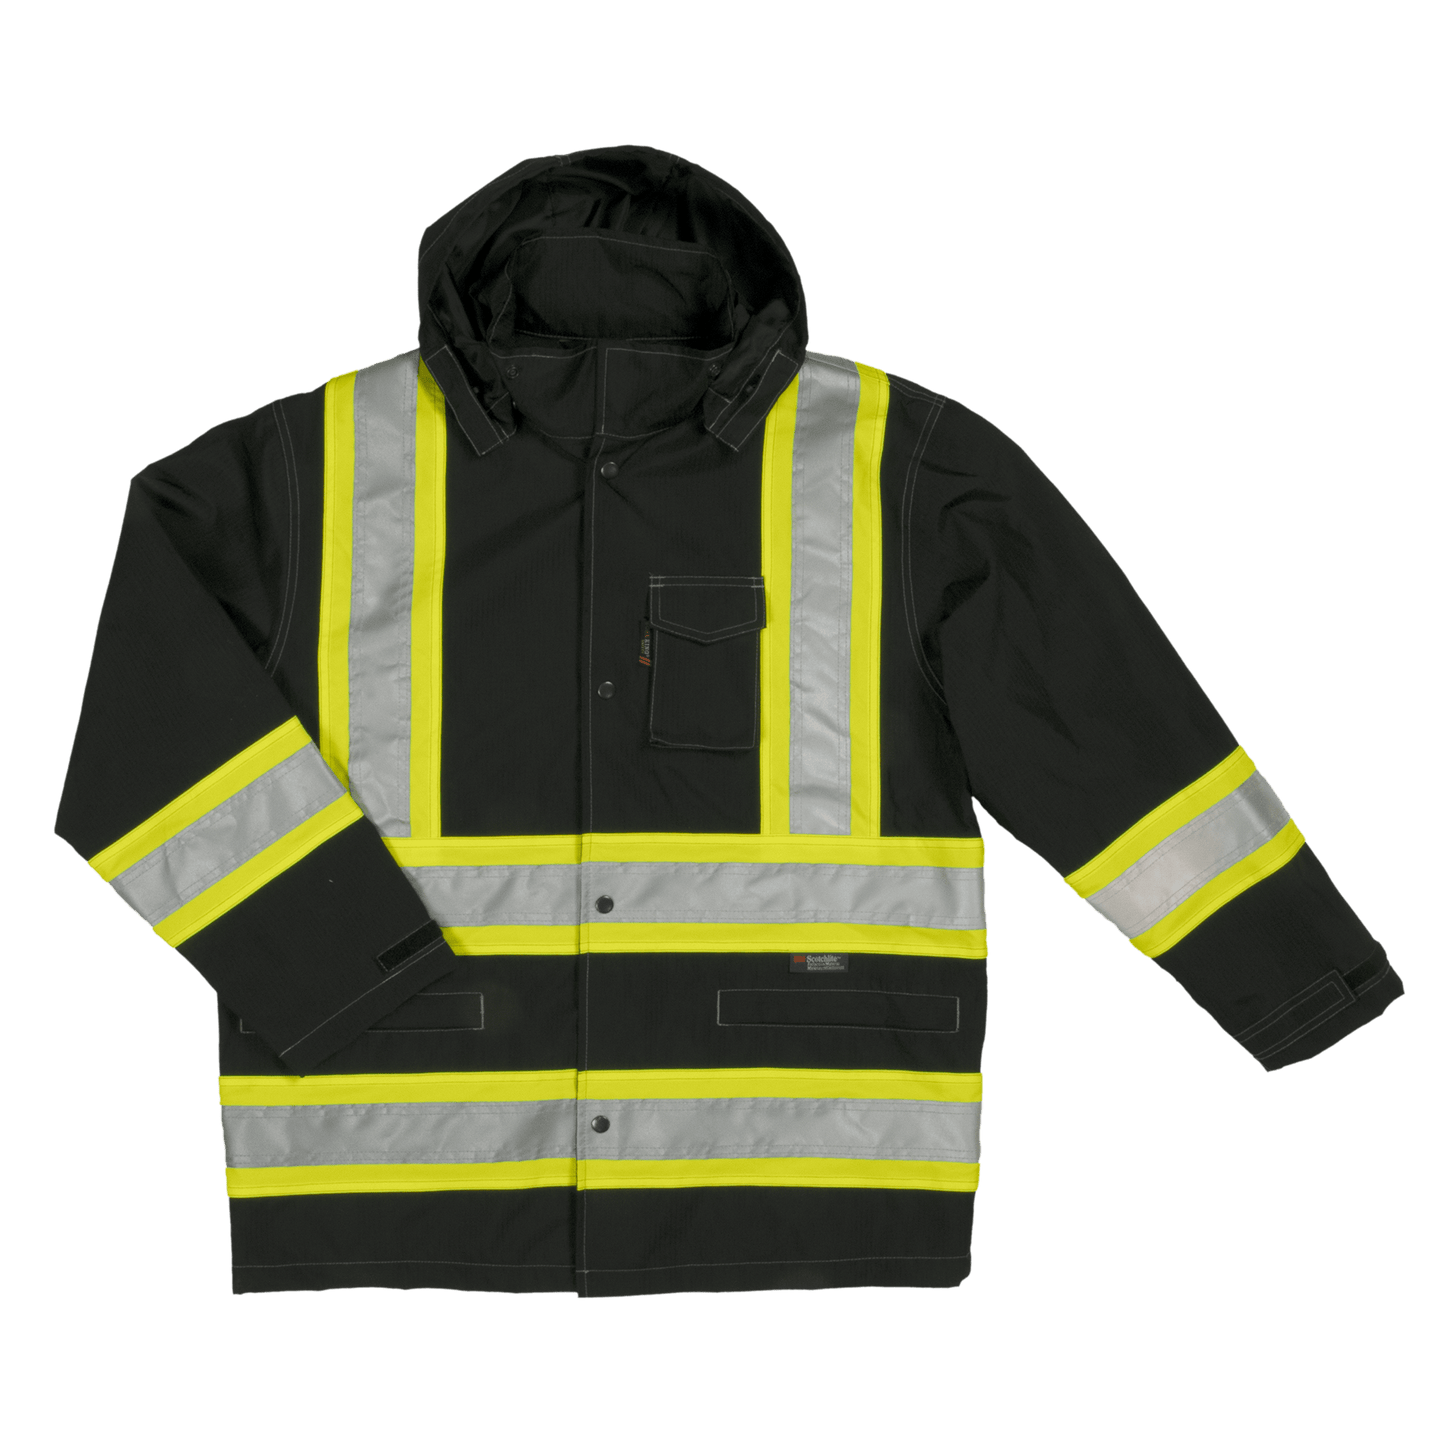 Tough Duck Safety Rain Jacket - S372 - Black